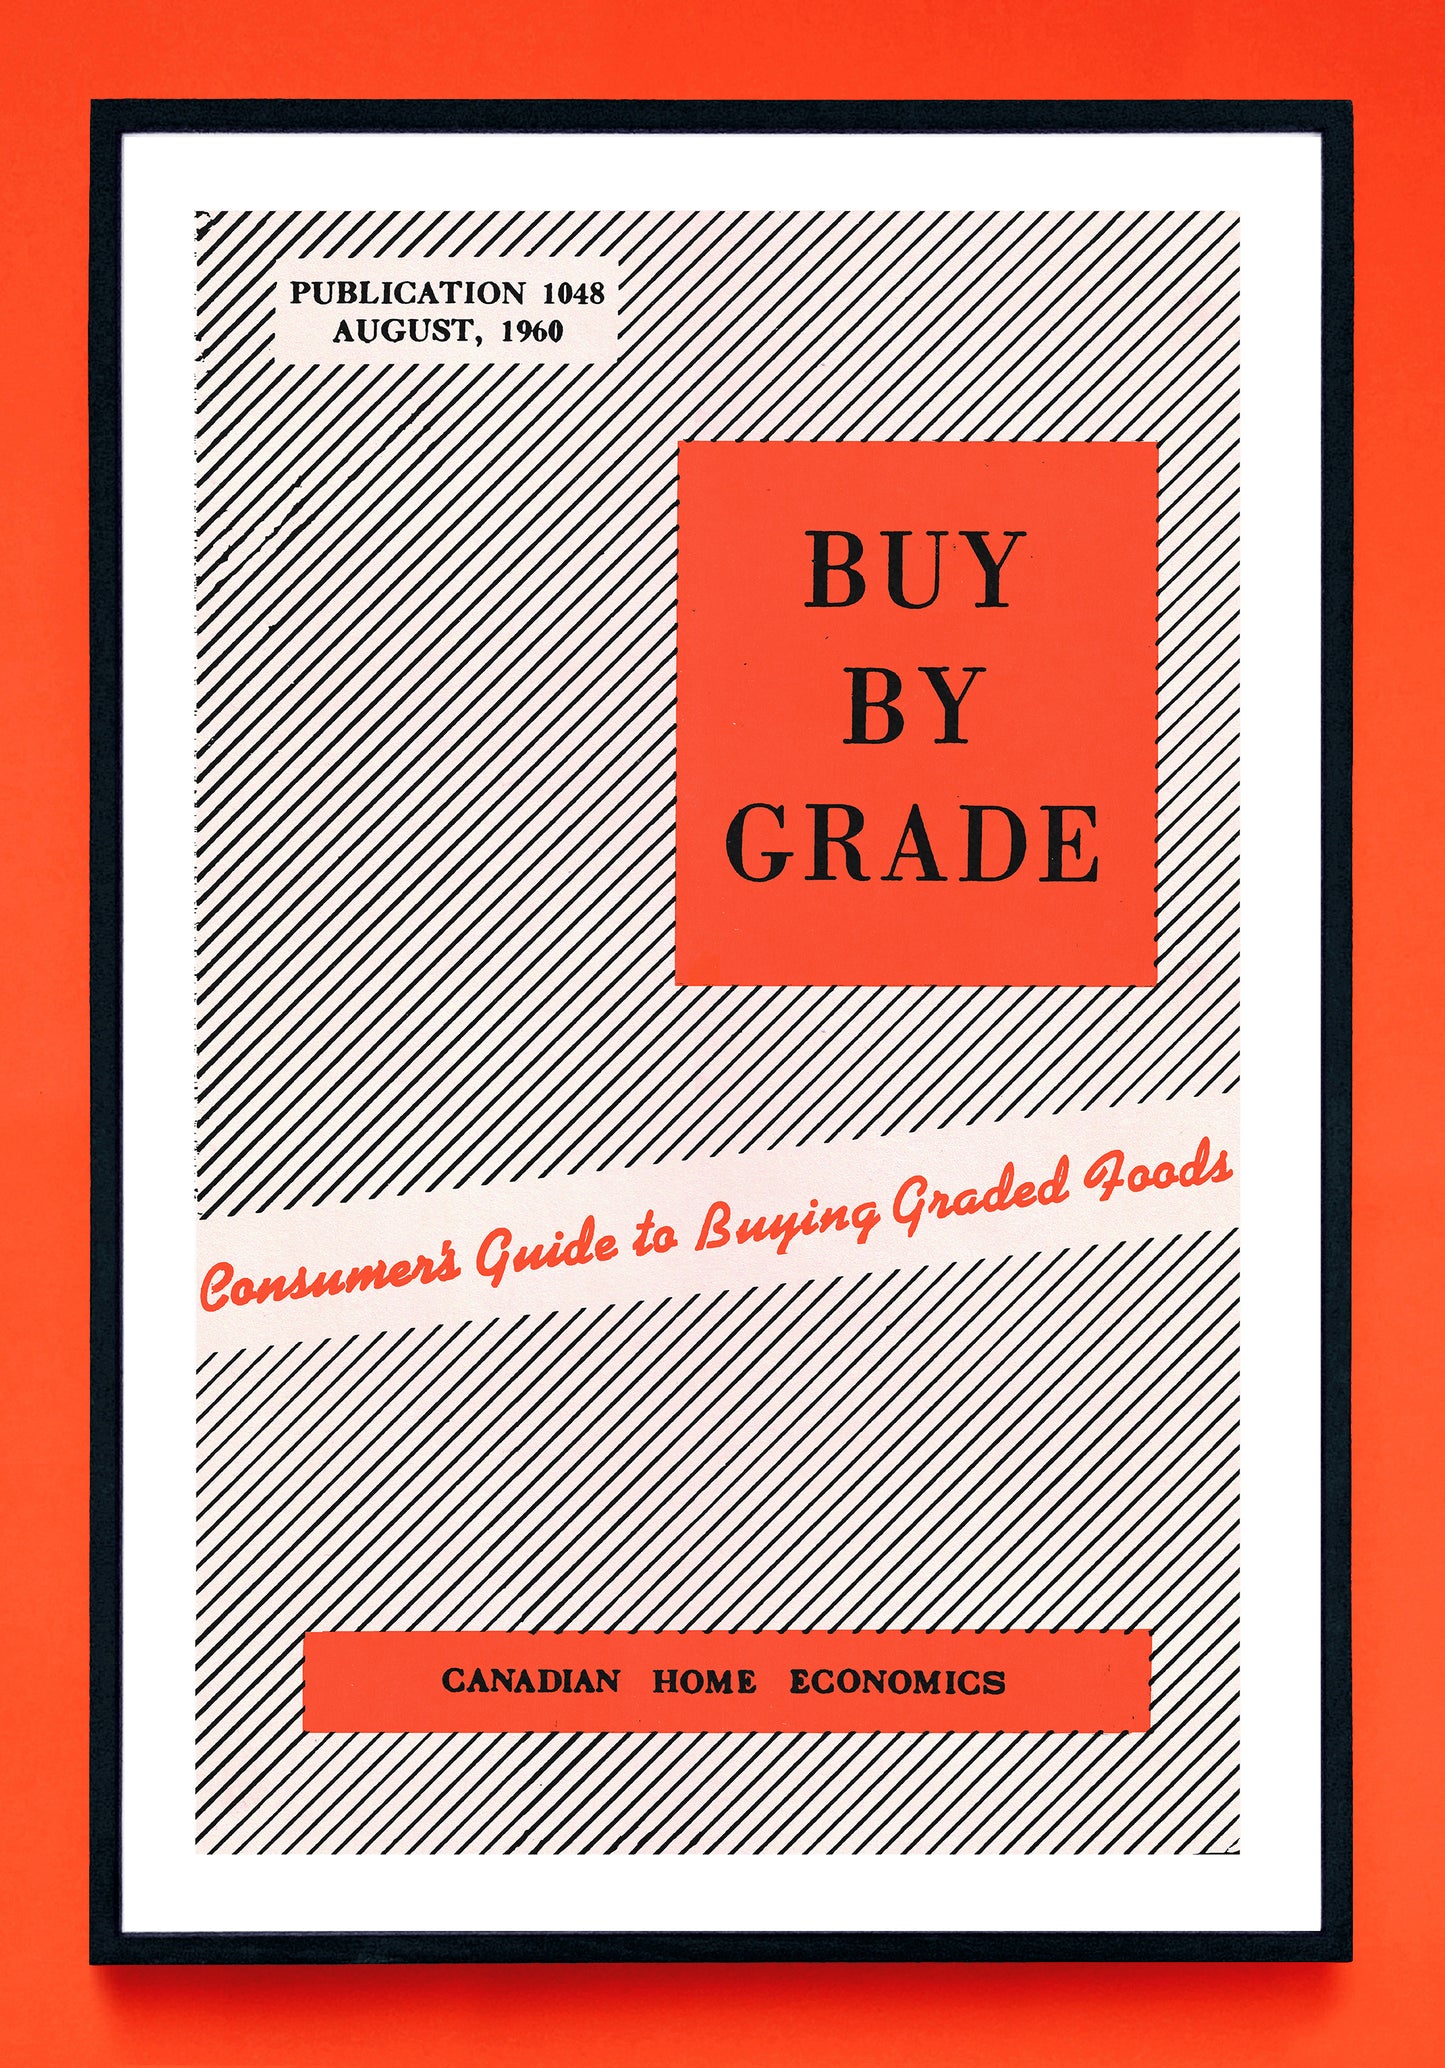 "Buy By Grade" print (1960)